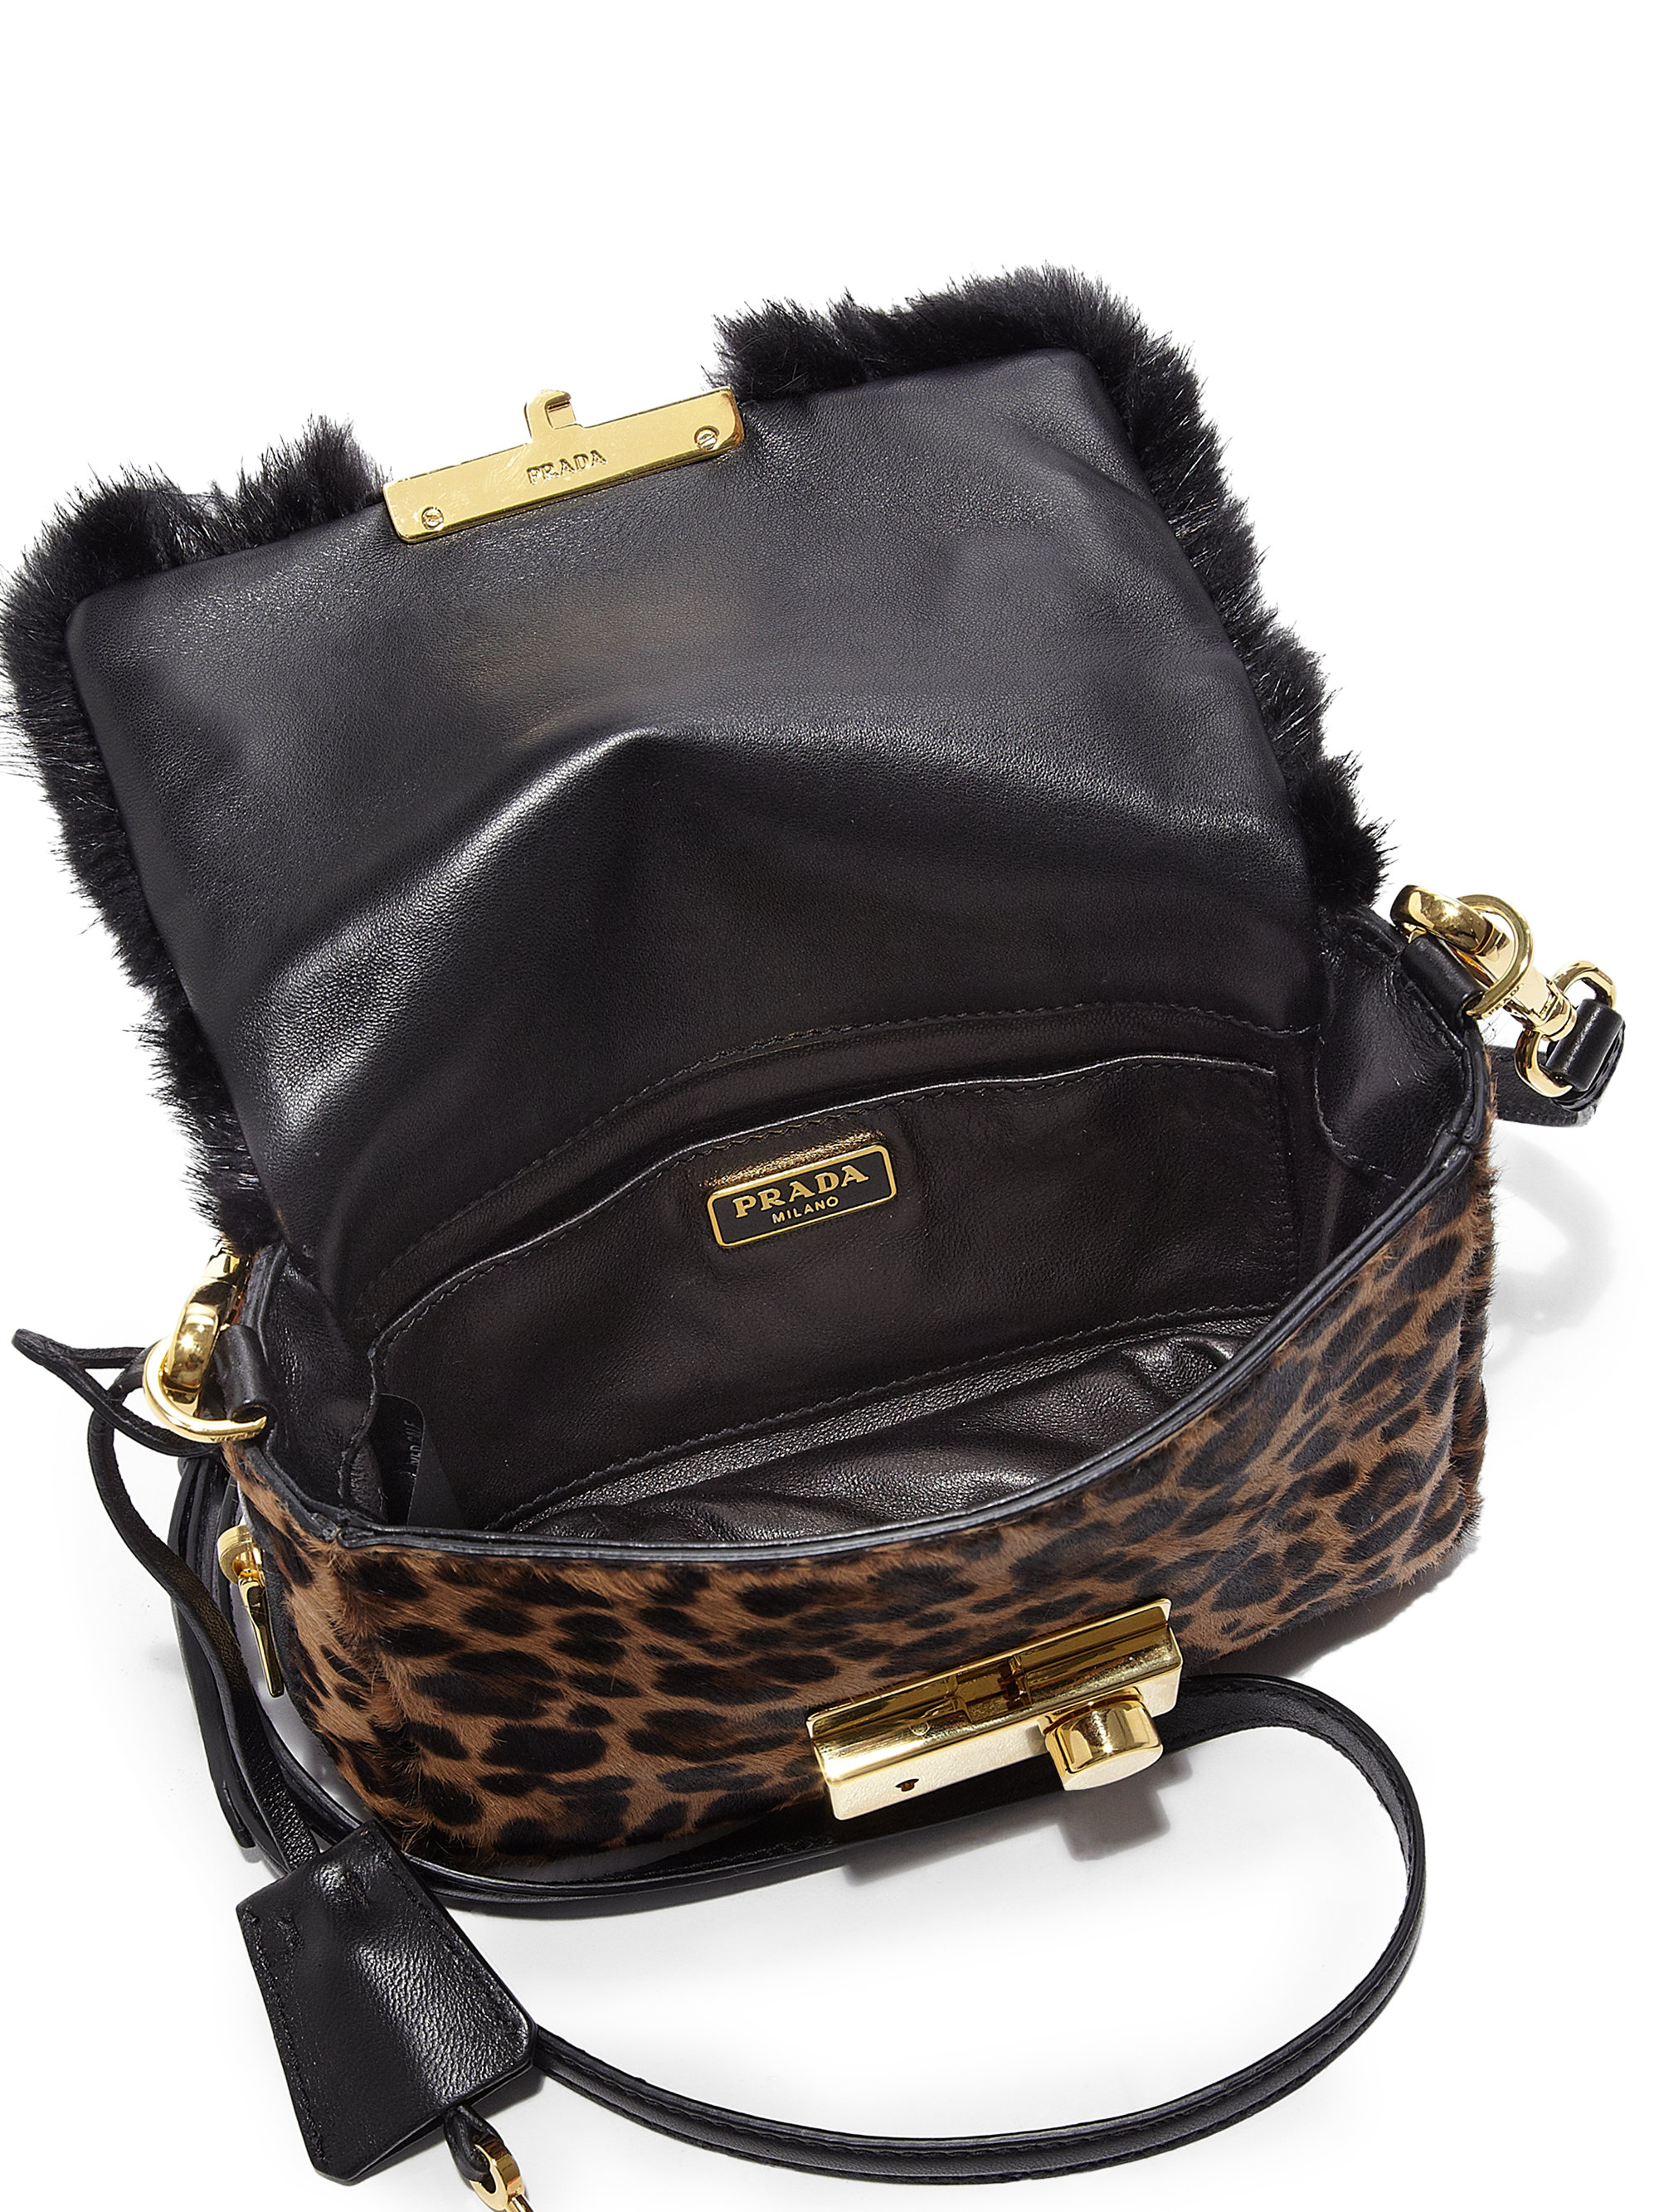 prada nylon black bag - Prada Cavallino \u0026amp; Mink Fur Crossbody Bag in Black (LEOPARD) | Lyst